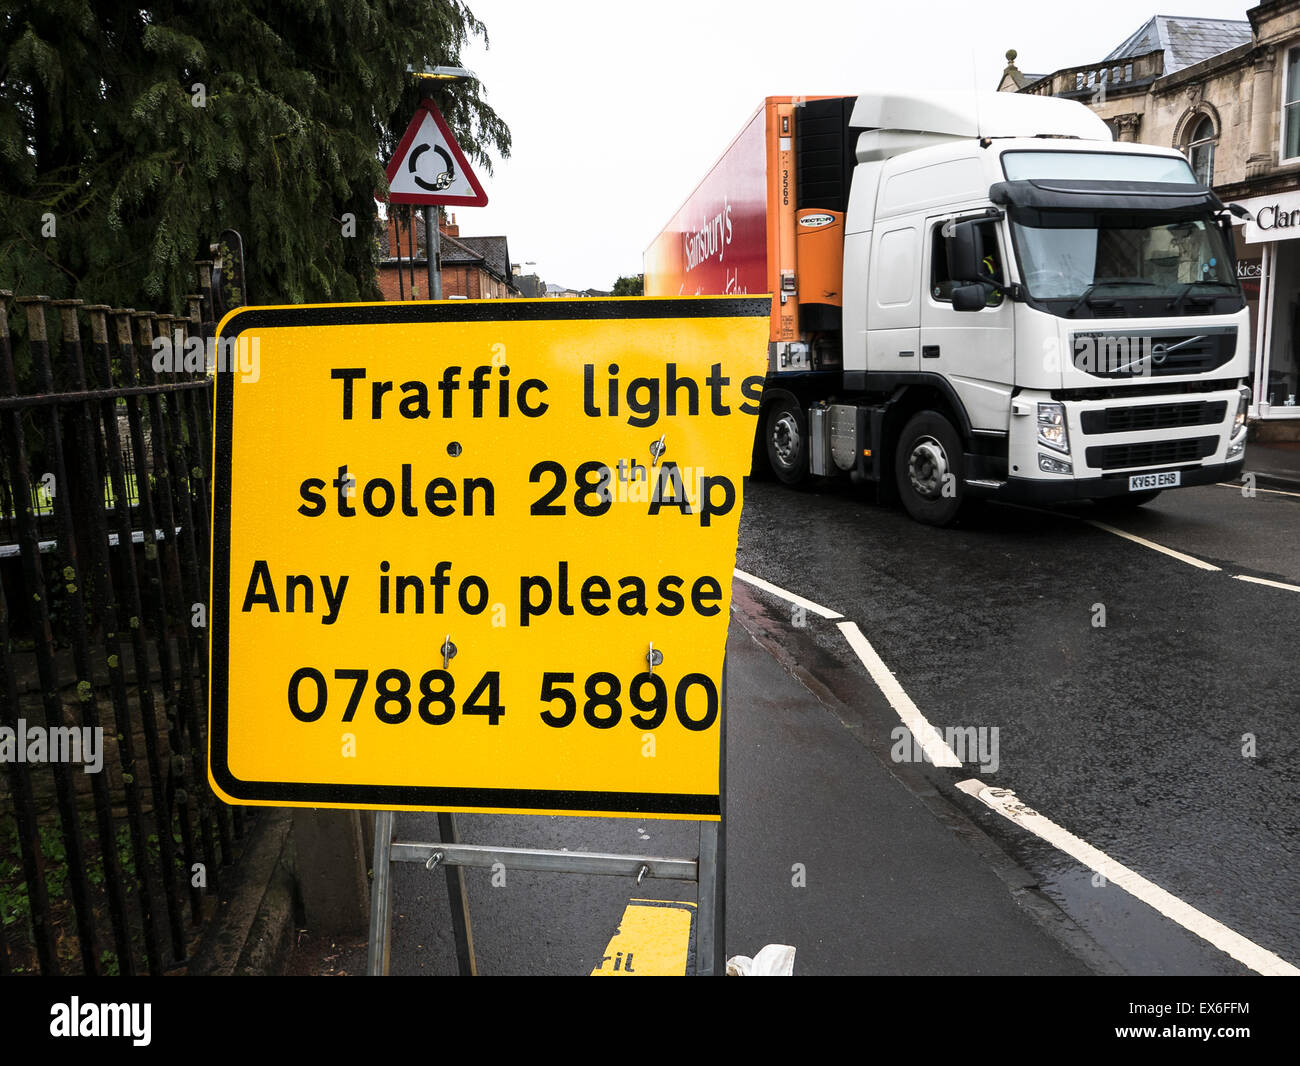 Damaged sign seeking help to find traffic lights stolen from recent main road works in Melksham Wiltshire UK Stock Photo